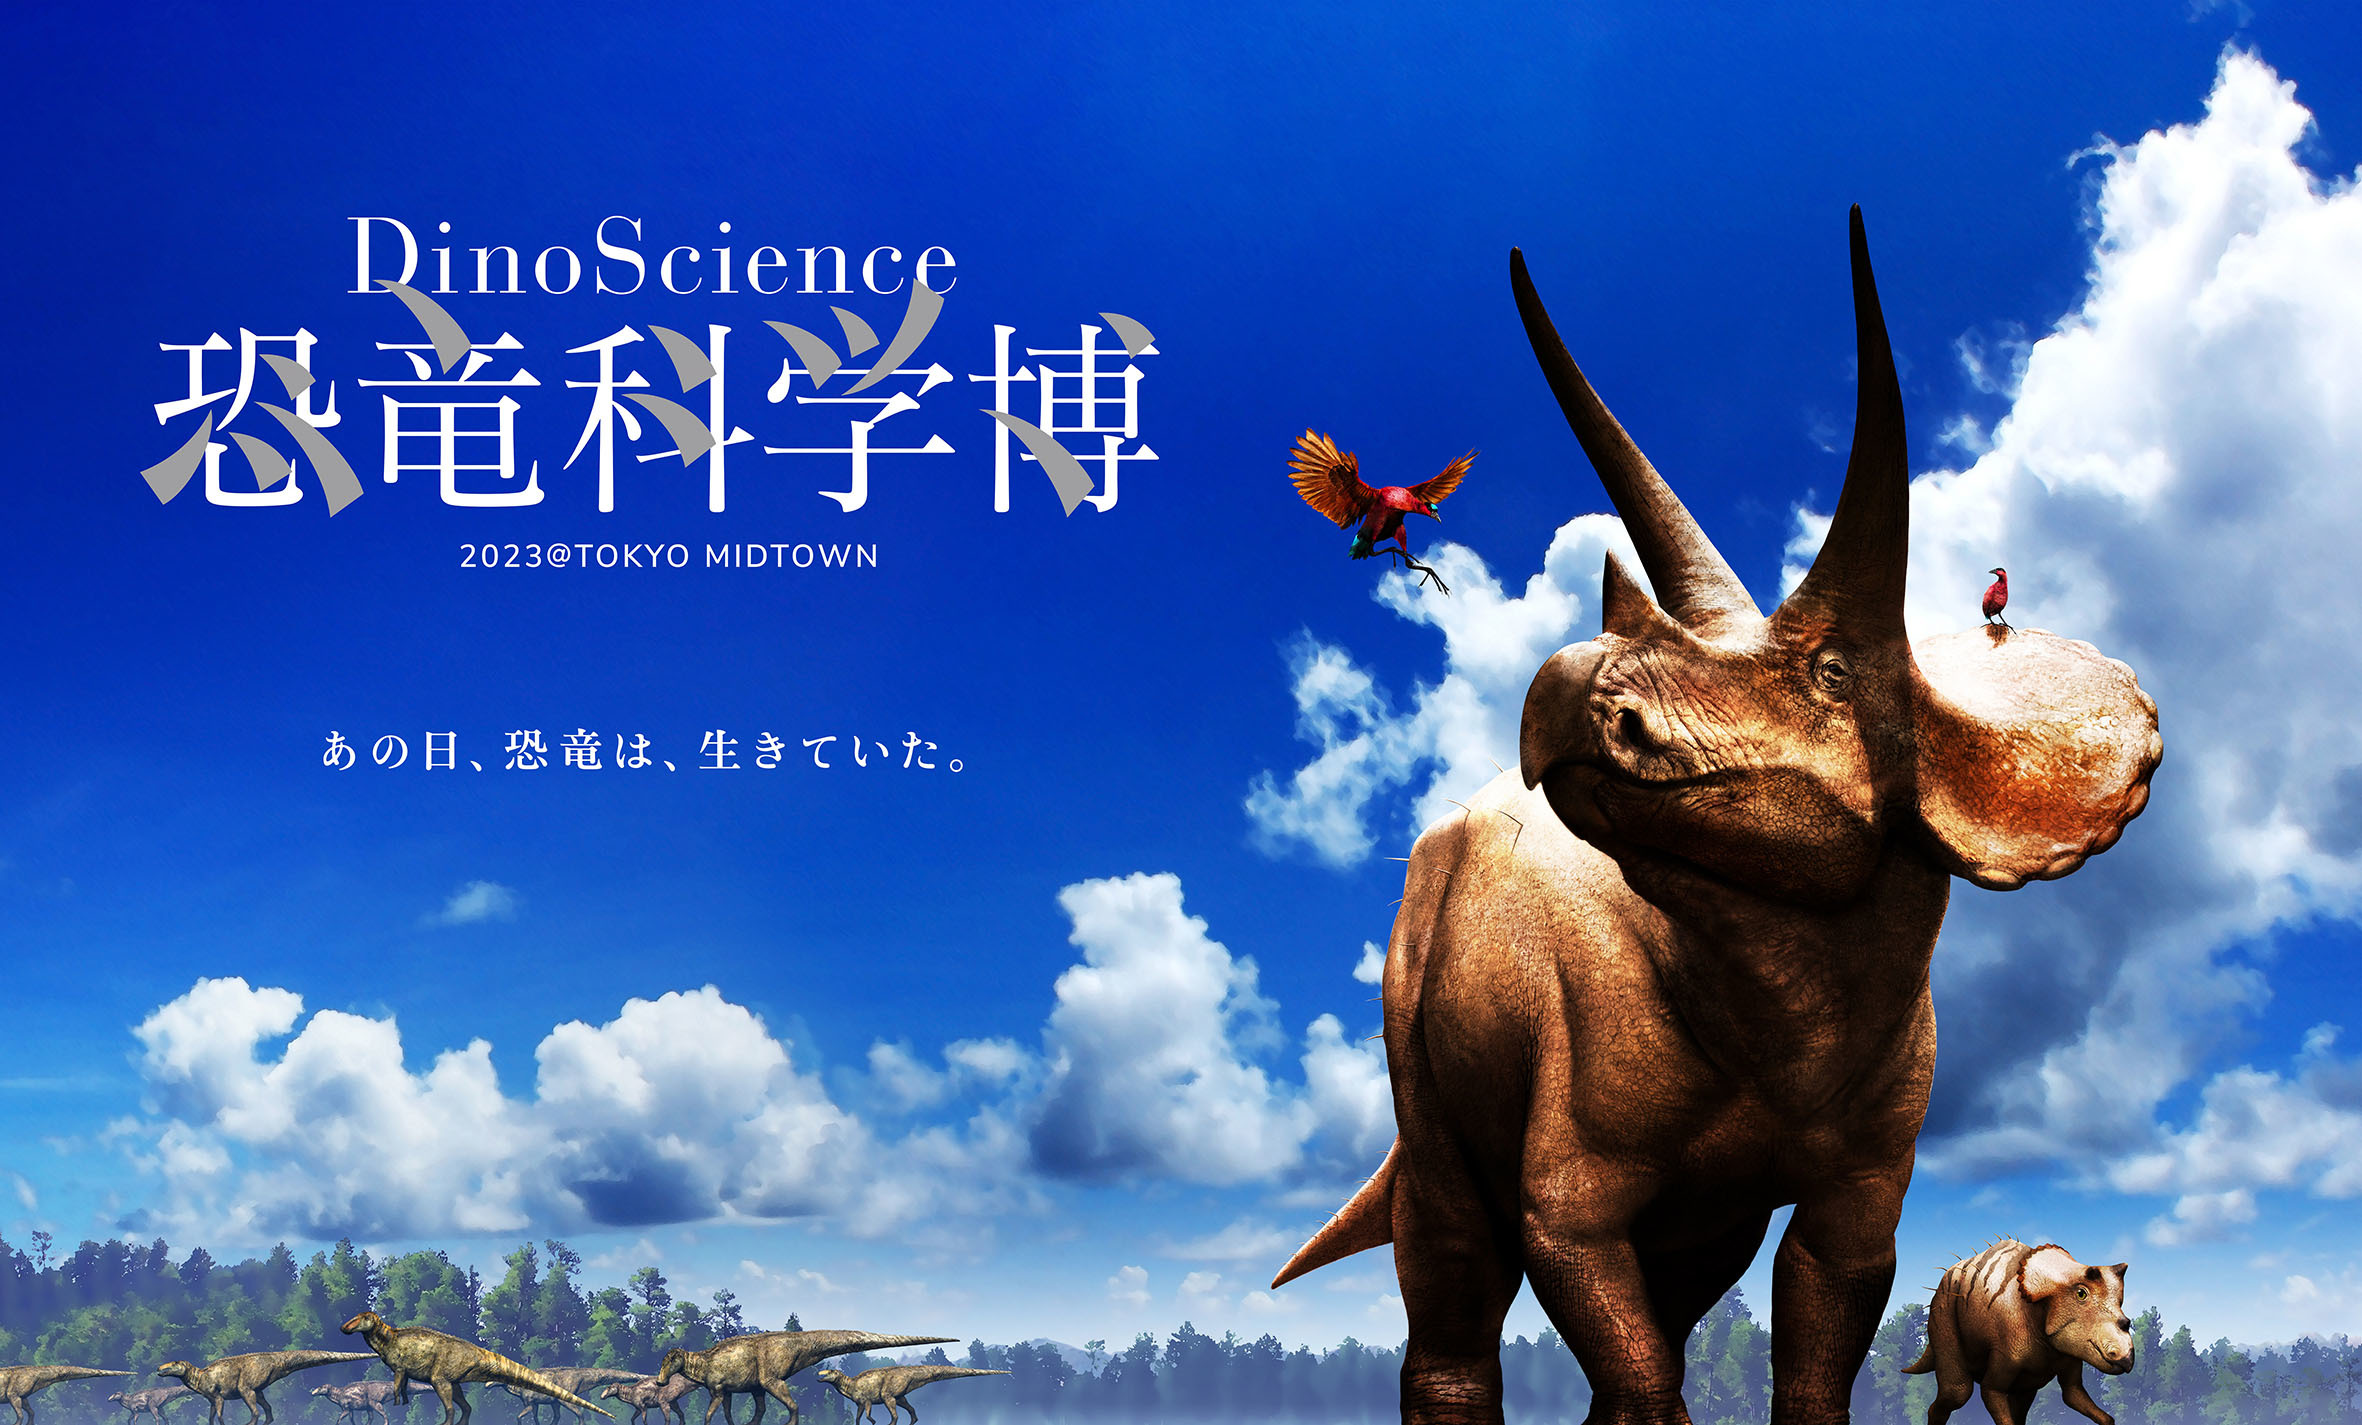 『DinoScience 恐竜科学博 2023@TOKYO MIDTOWN』 イラスト：恐竜くん(C)Masashi Tanaka